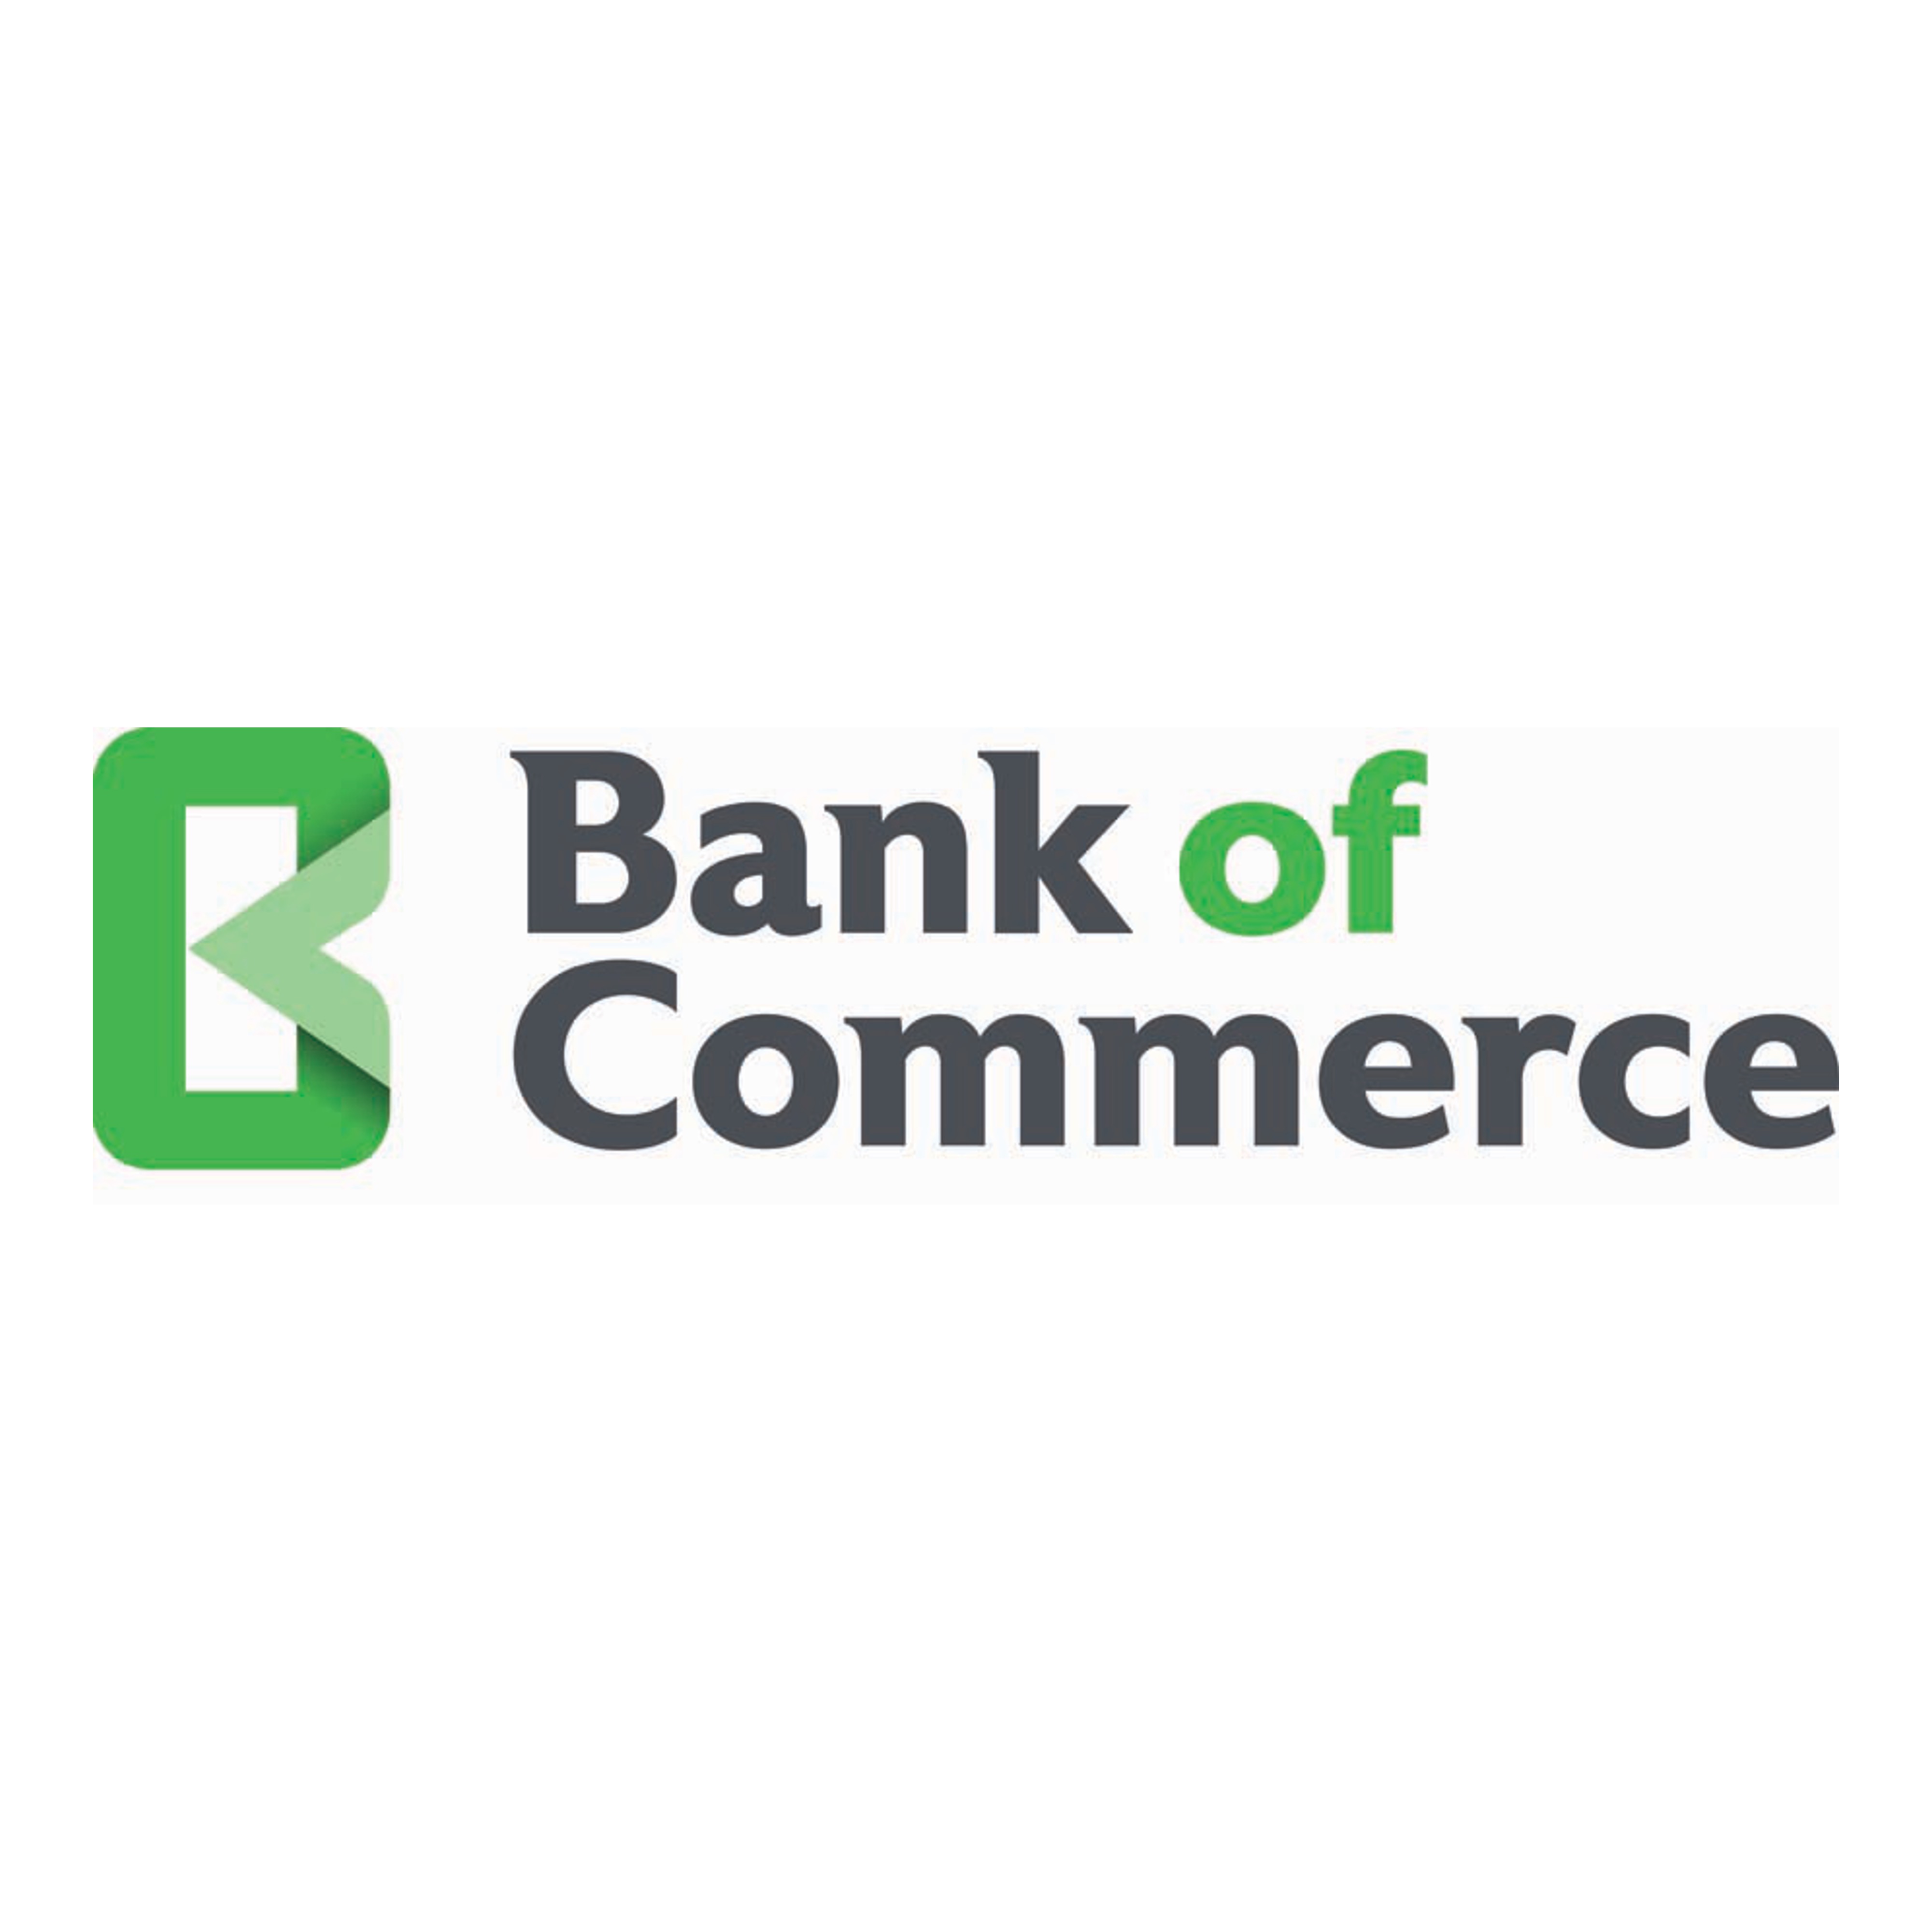 Bank of Commerce logo